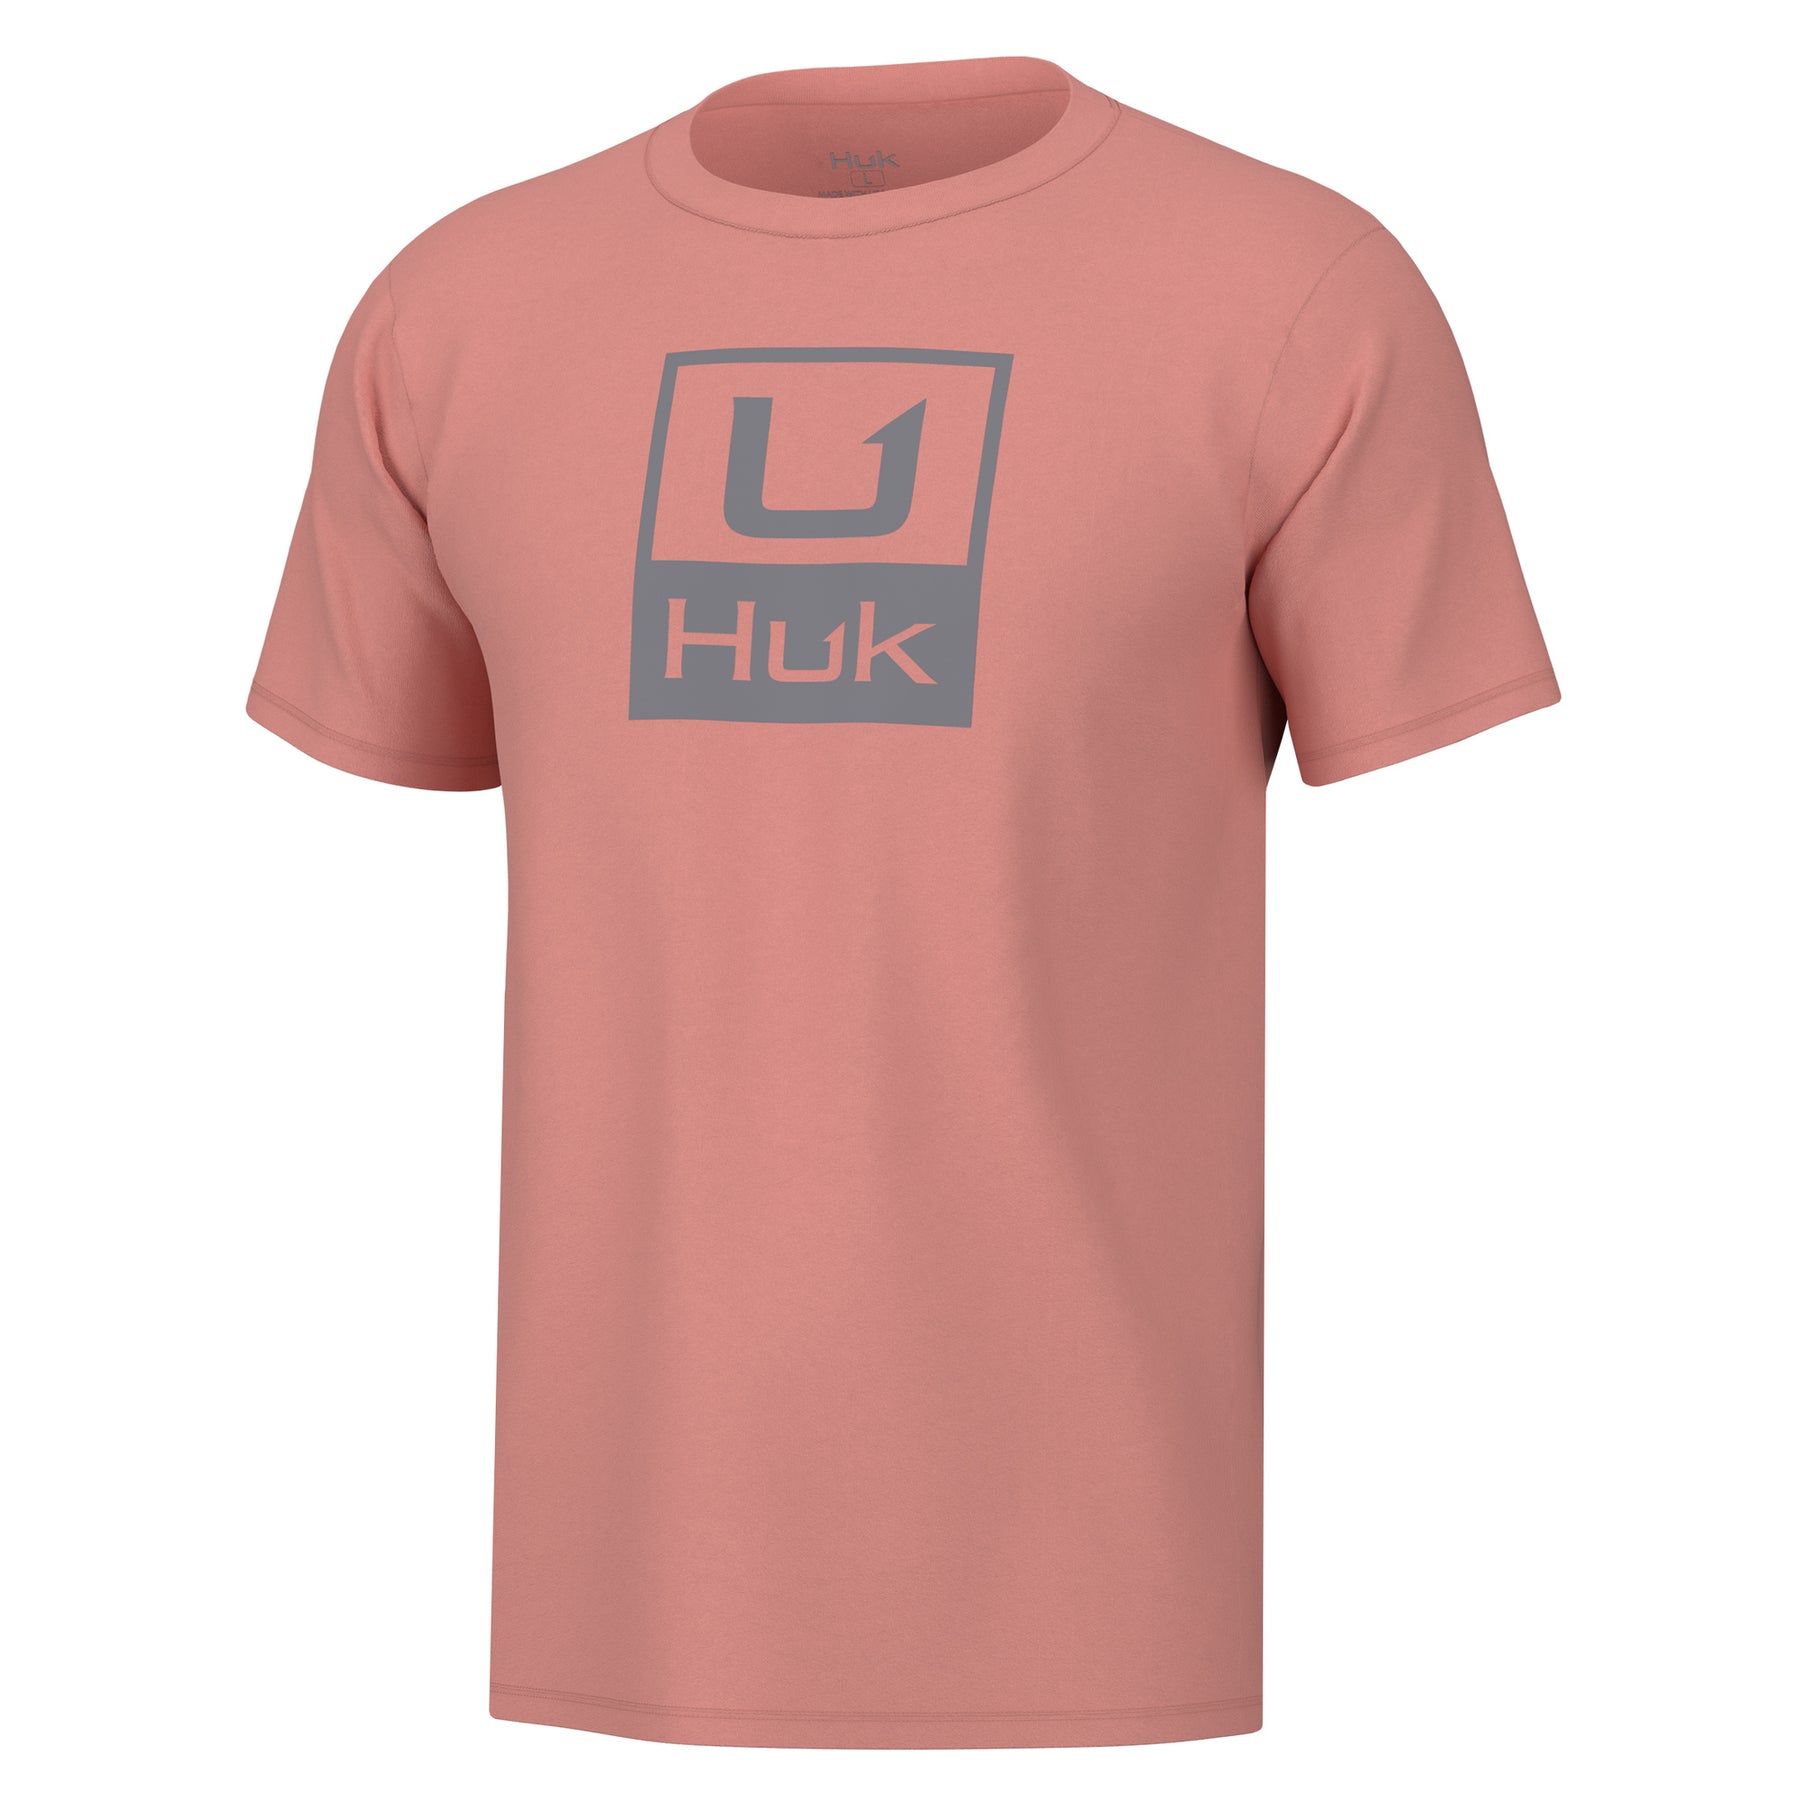 Huk shirt mens small - Gem